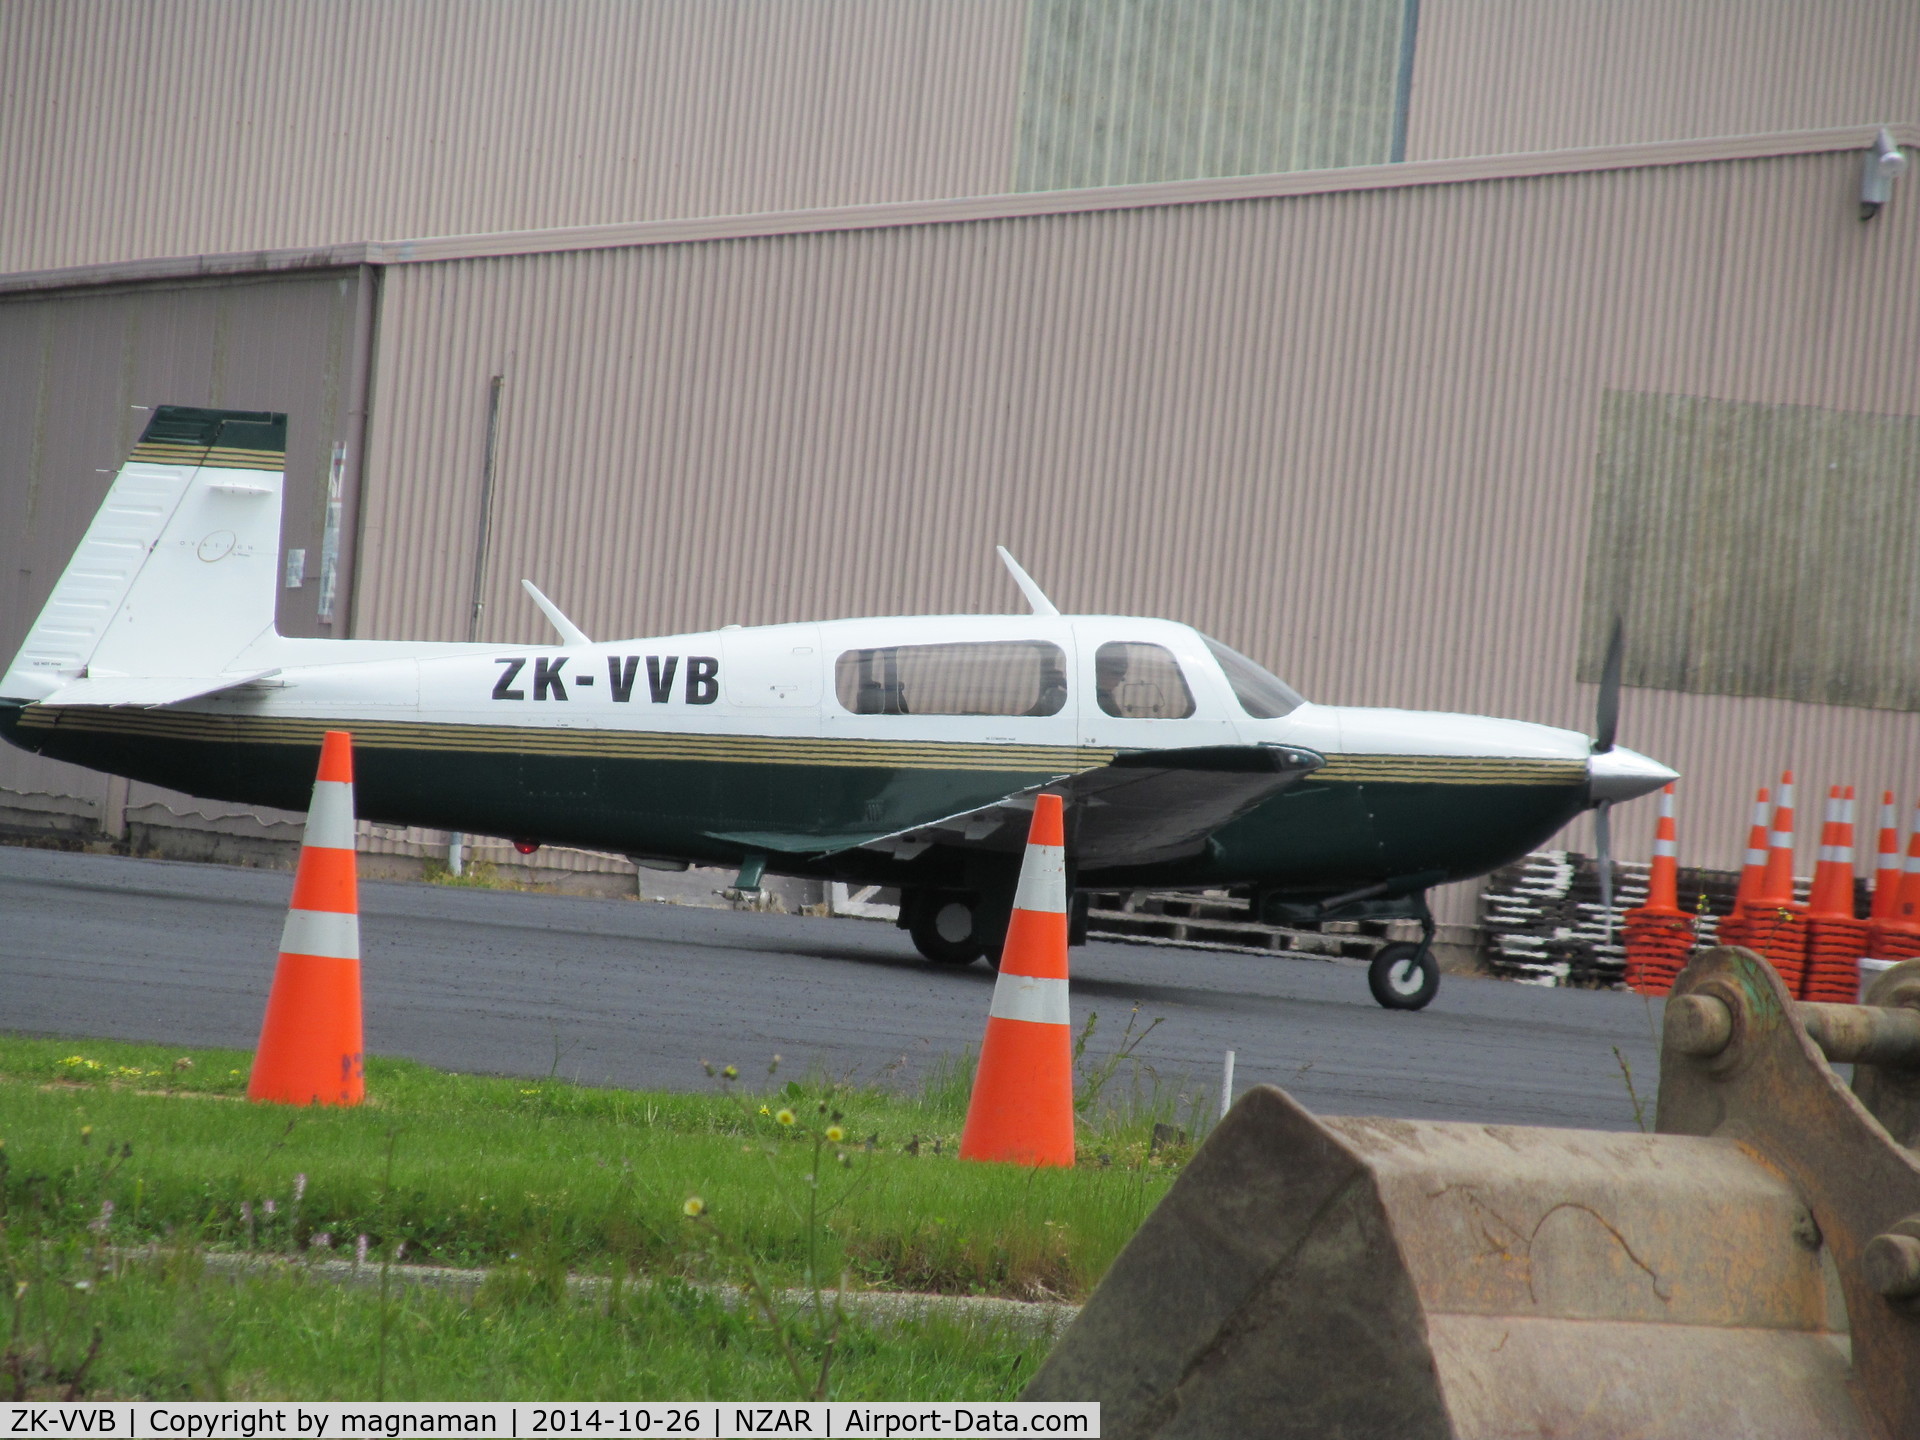 ZK-VVB, 1996 Mooney M20R Ovation C/N 29-0091, departing its hangar - just got it!